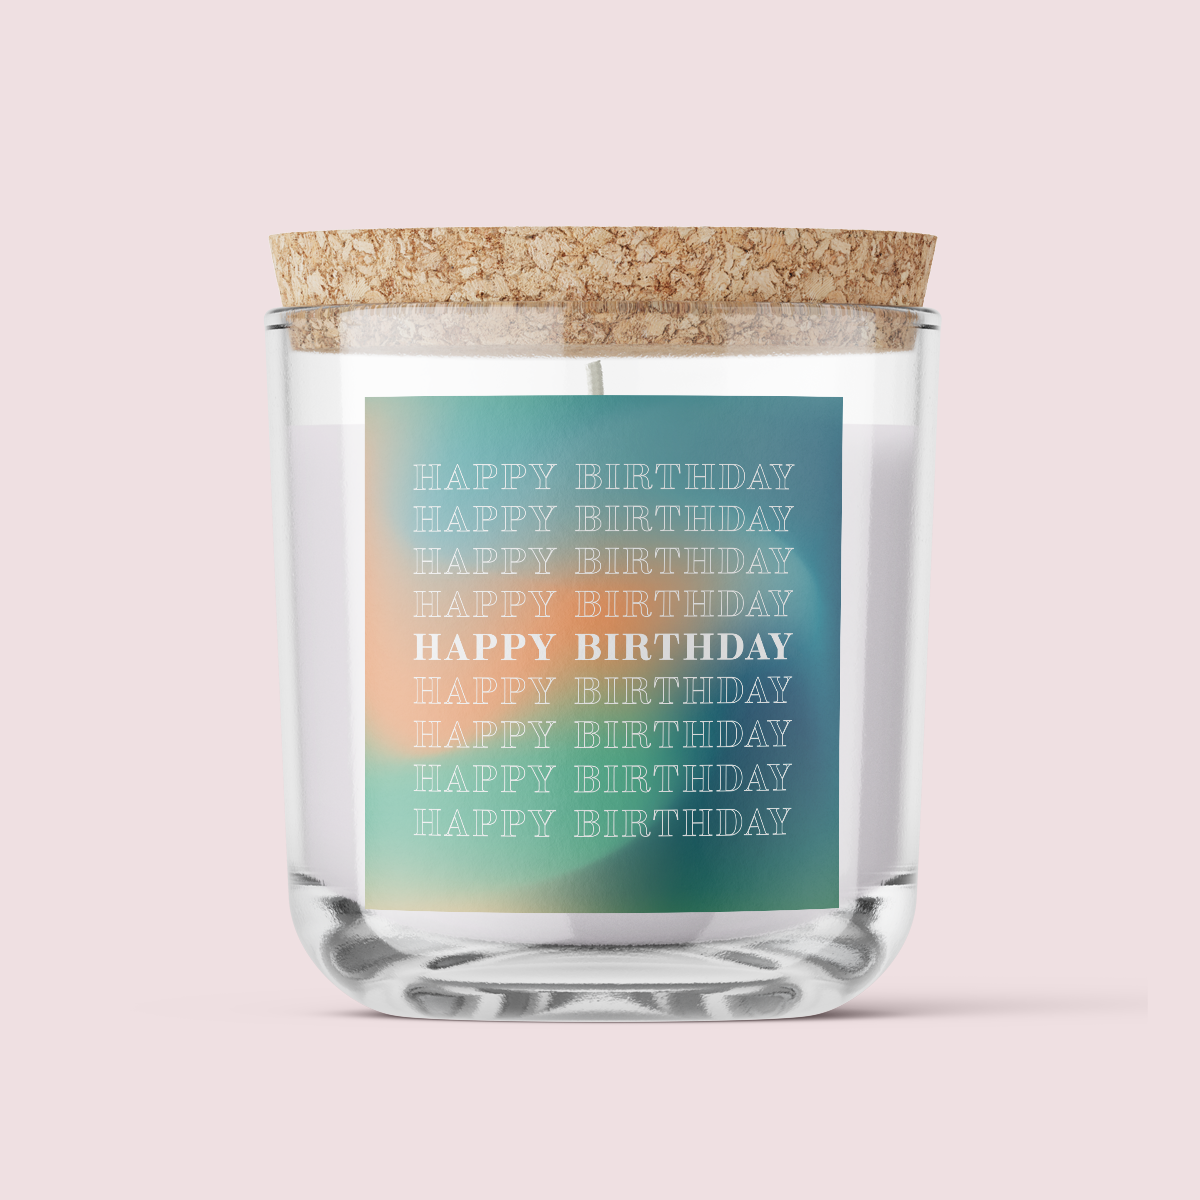 Happy Birthday Label Pack - Design SIX - SQUARE